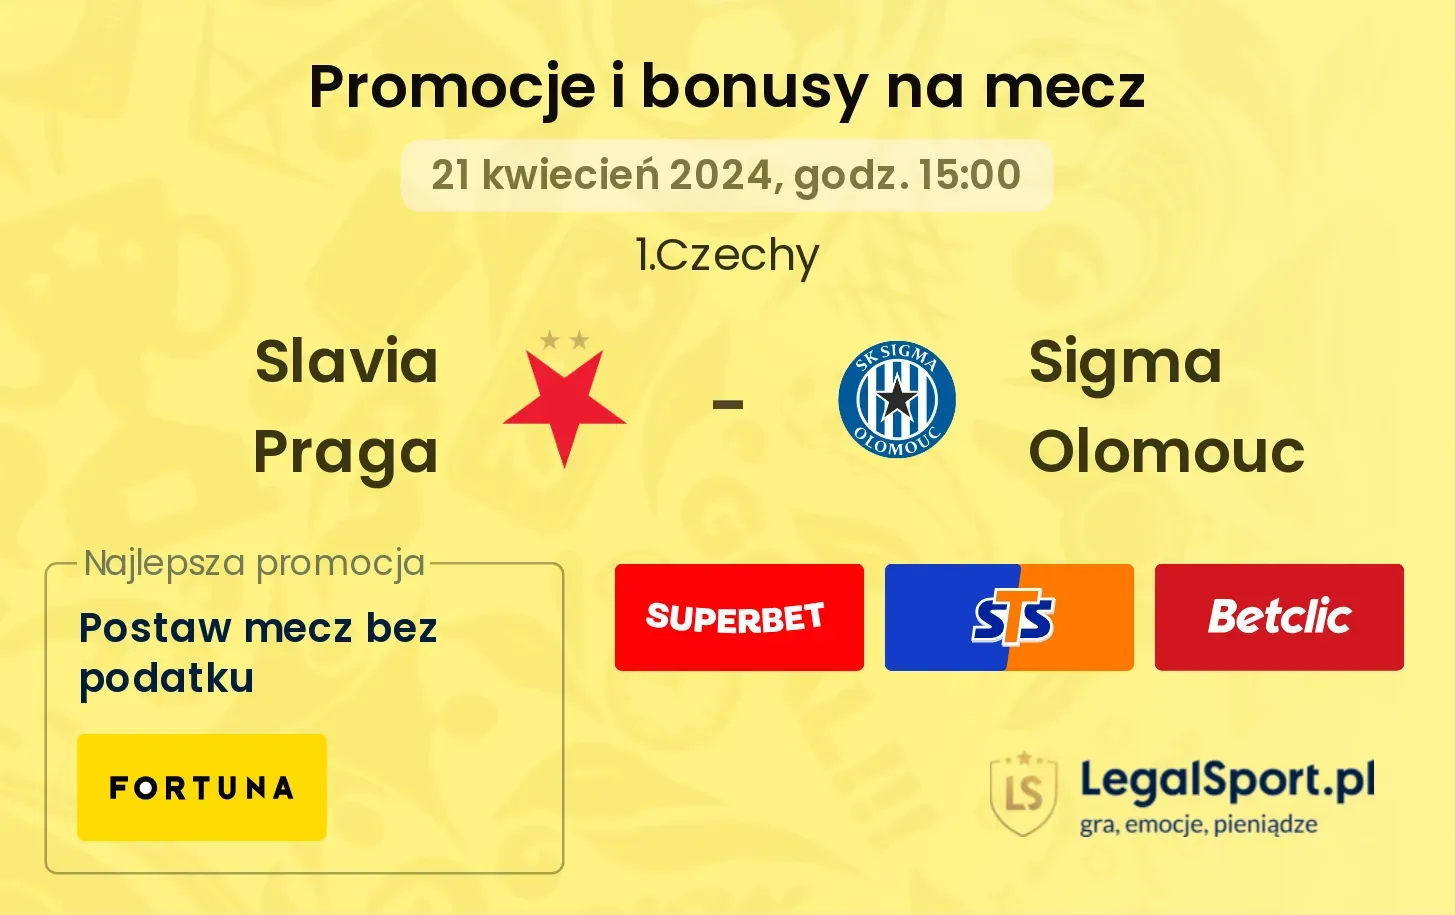 Slavia Praga - Sigma Olomouc promocje bonusy na mecz